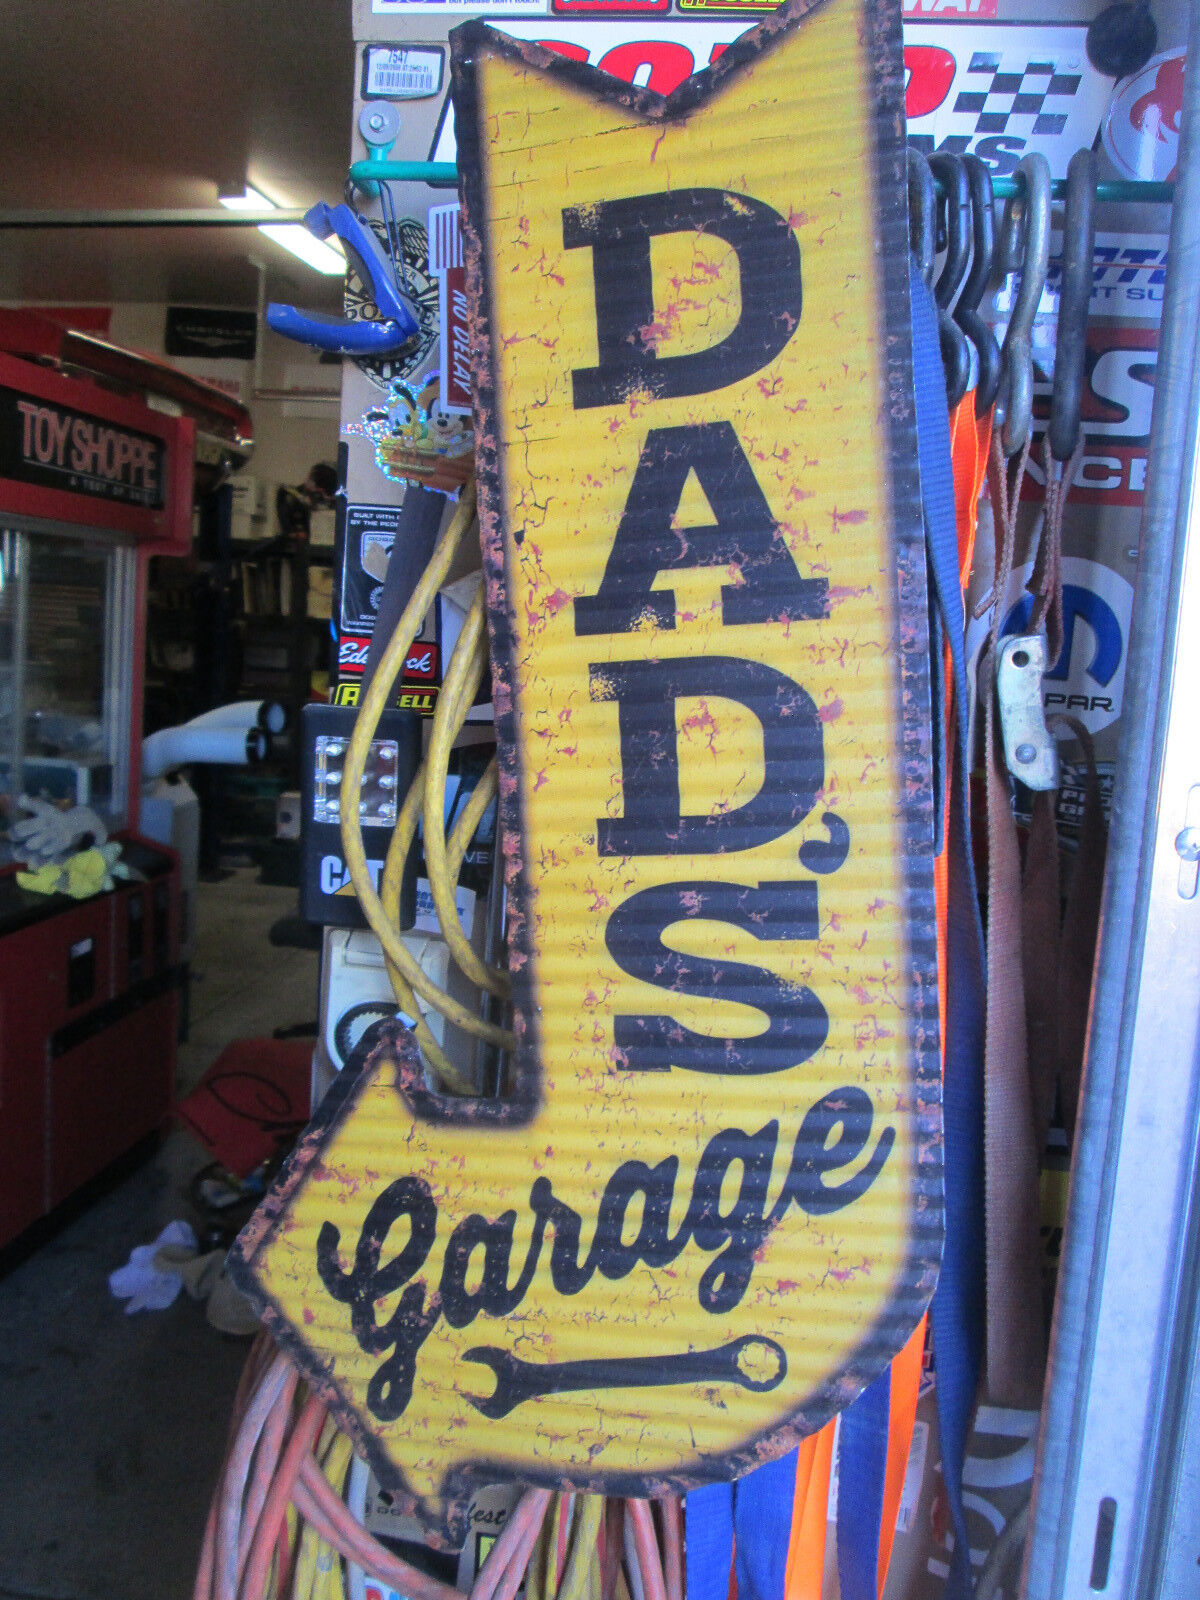 DADS GARAGE ARROW SIGNS RETRO METAL COOL old school RUSTIC LOOK MAN CAVE GARAGE